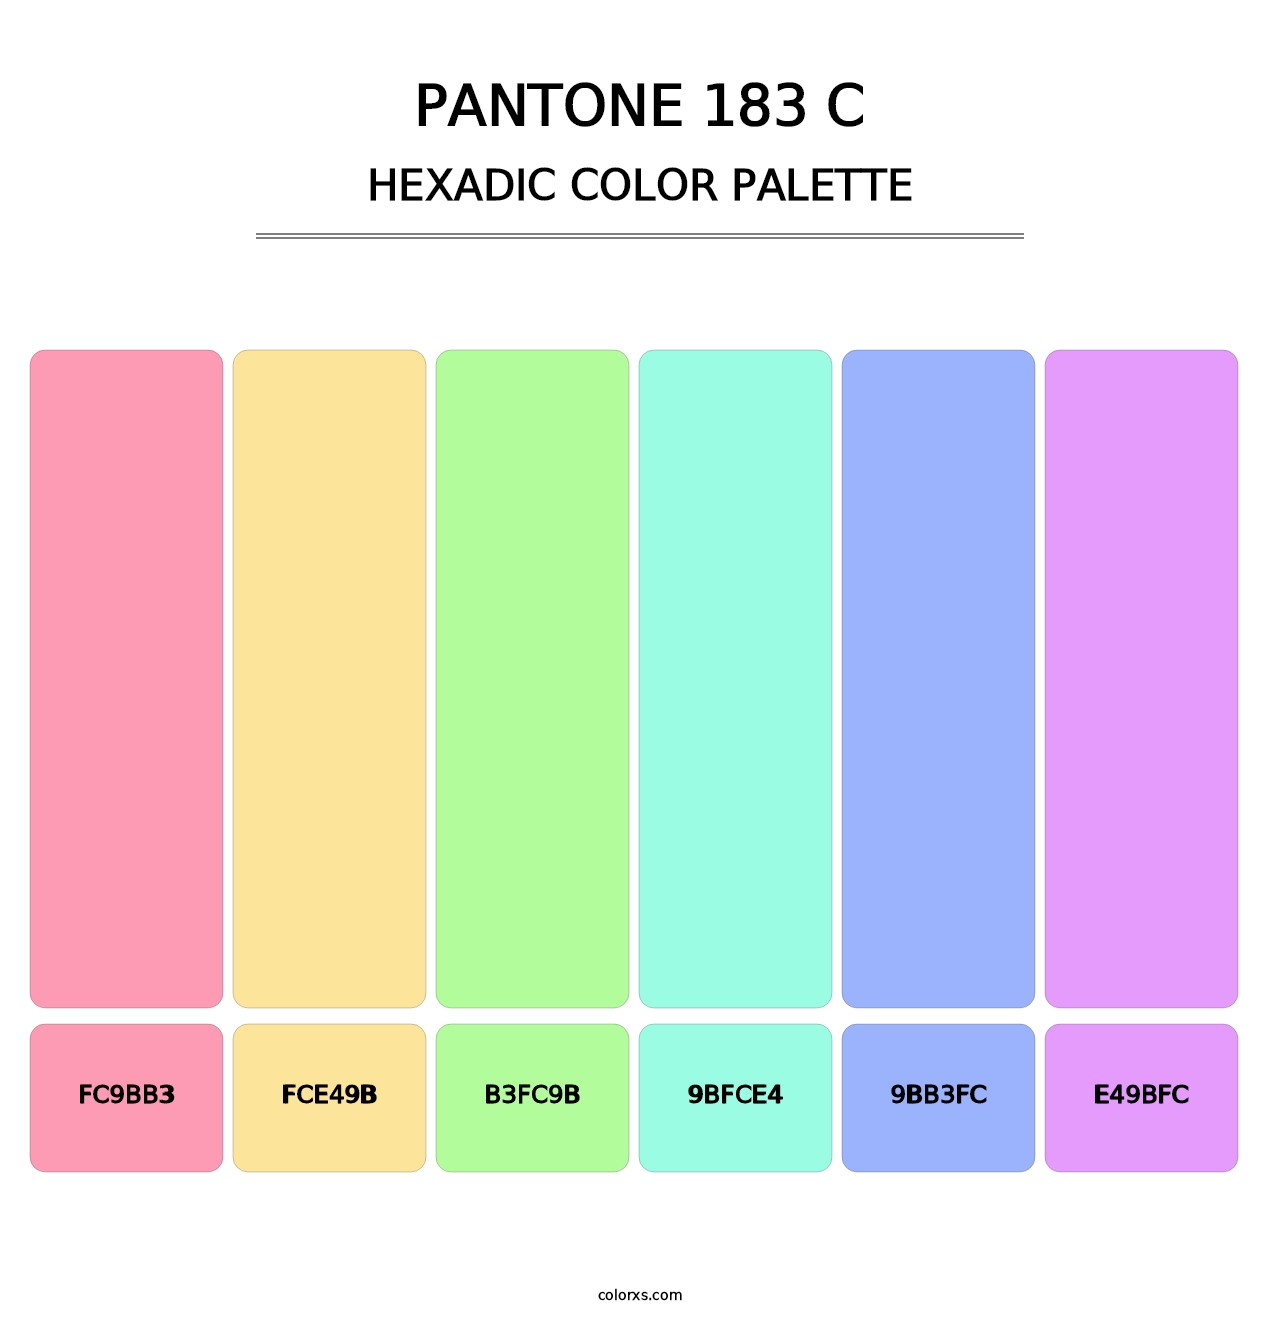 PANTONE 183 C - Hexadic Color Palette